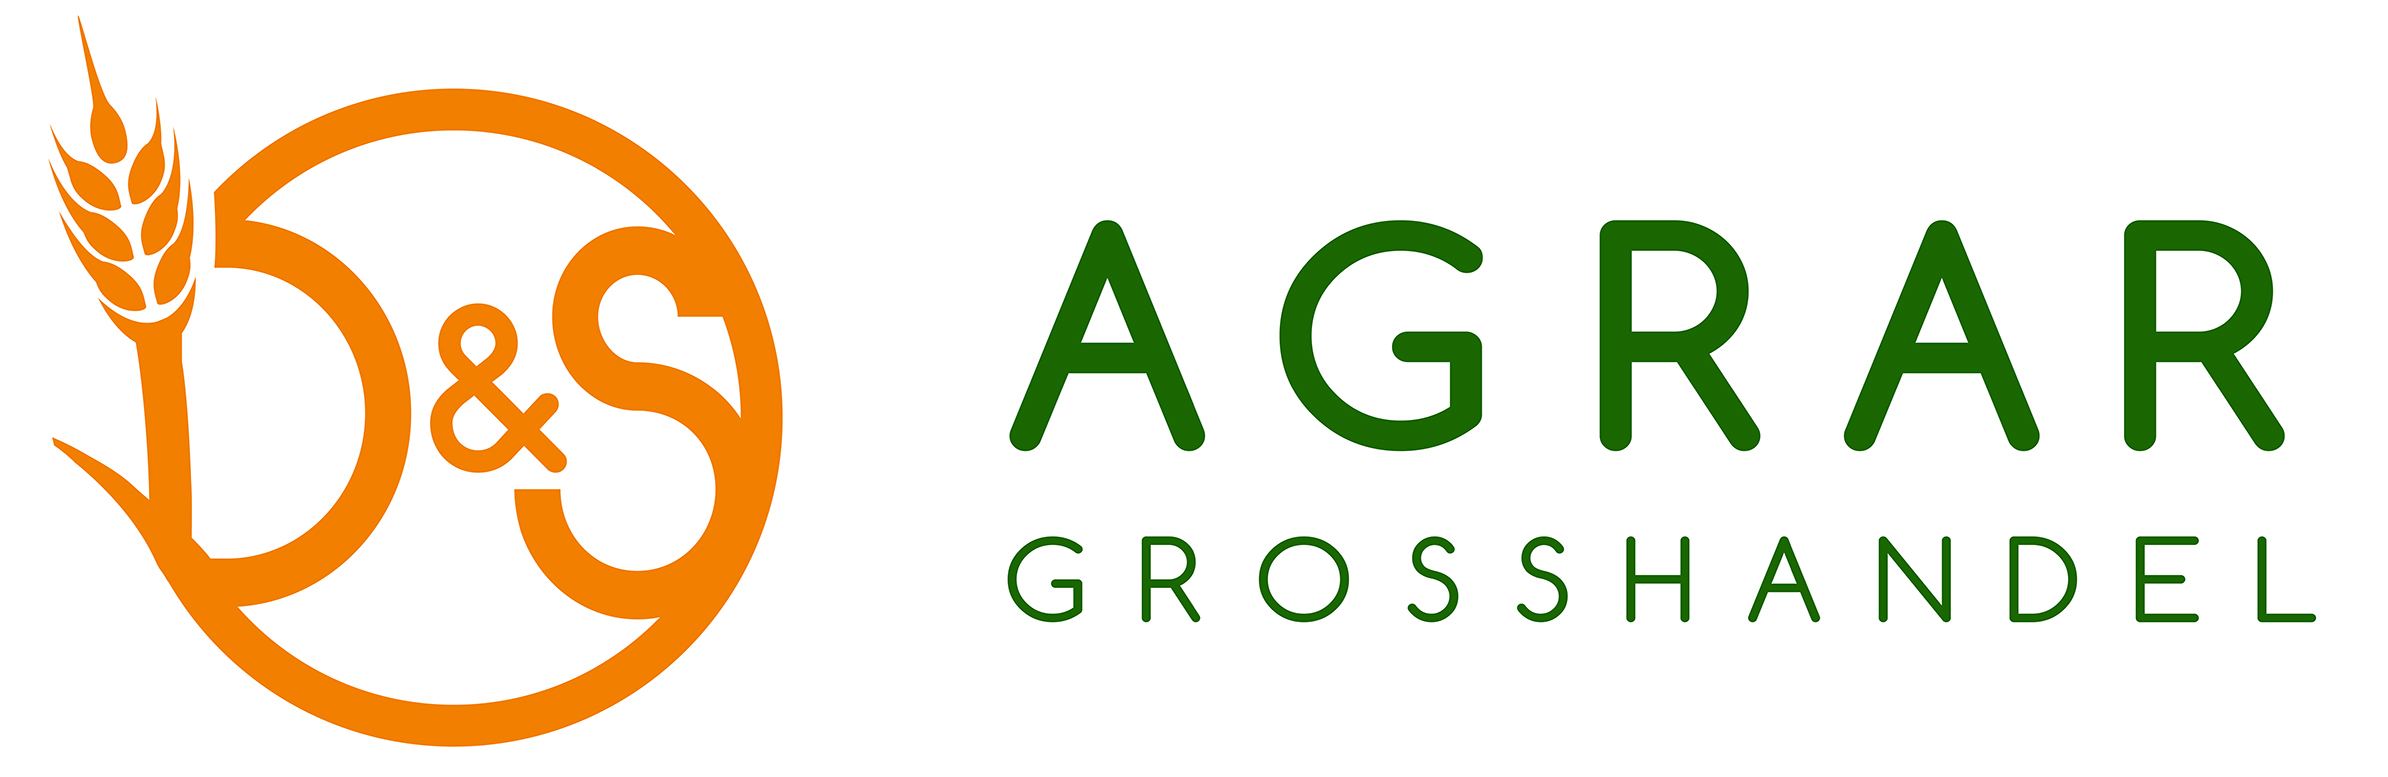 D&S Agrar - Handel GmbH